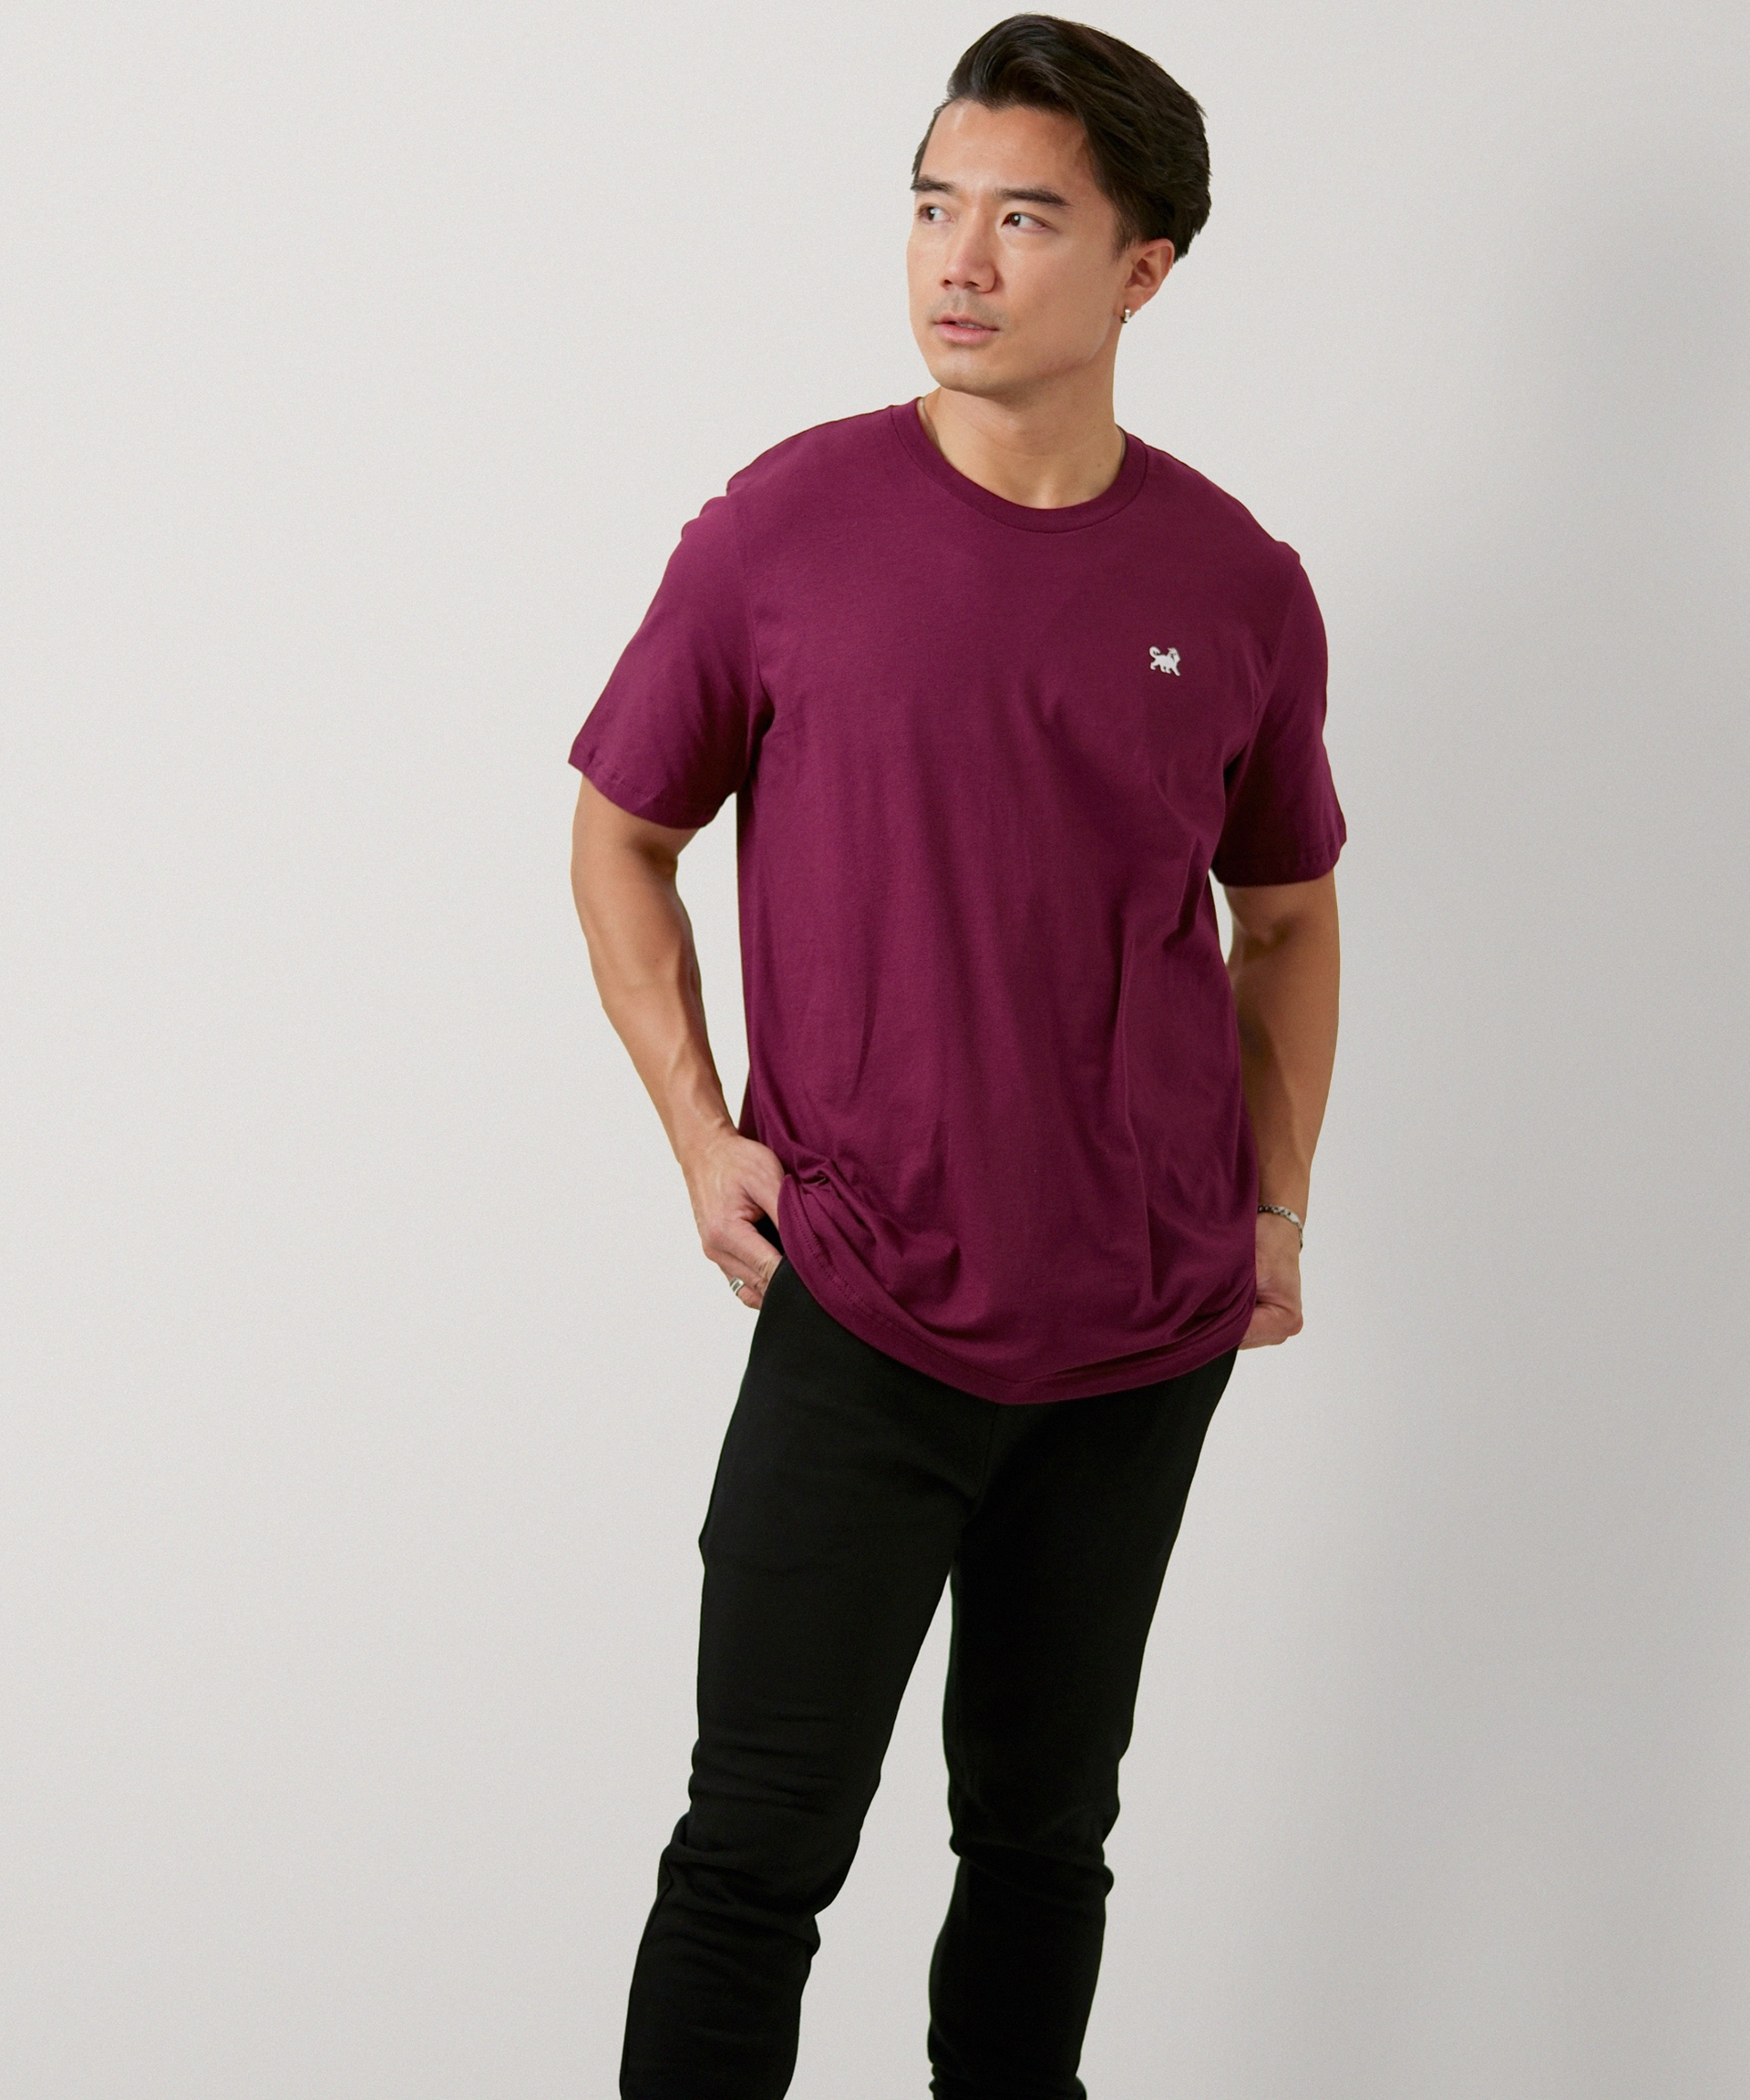 Signature Short Sleeve T-Shirt for Men (Maroon)